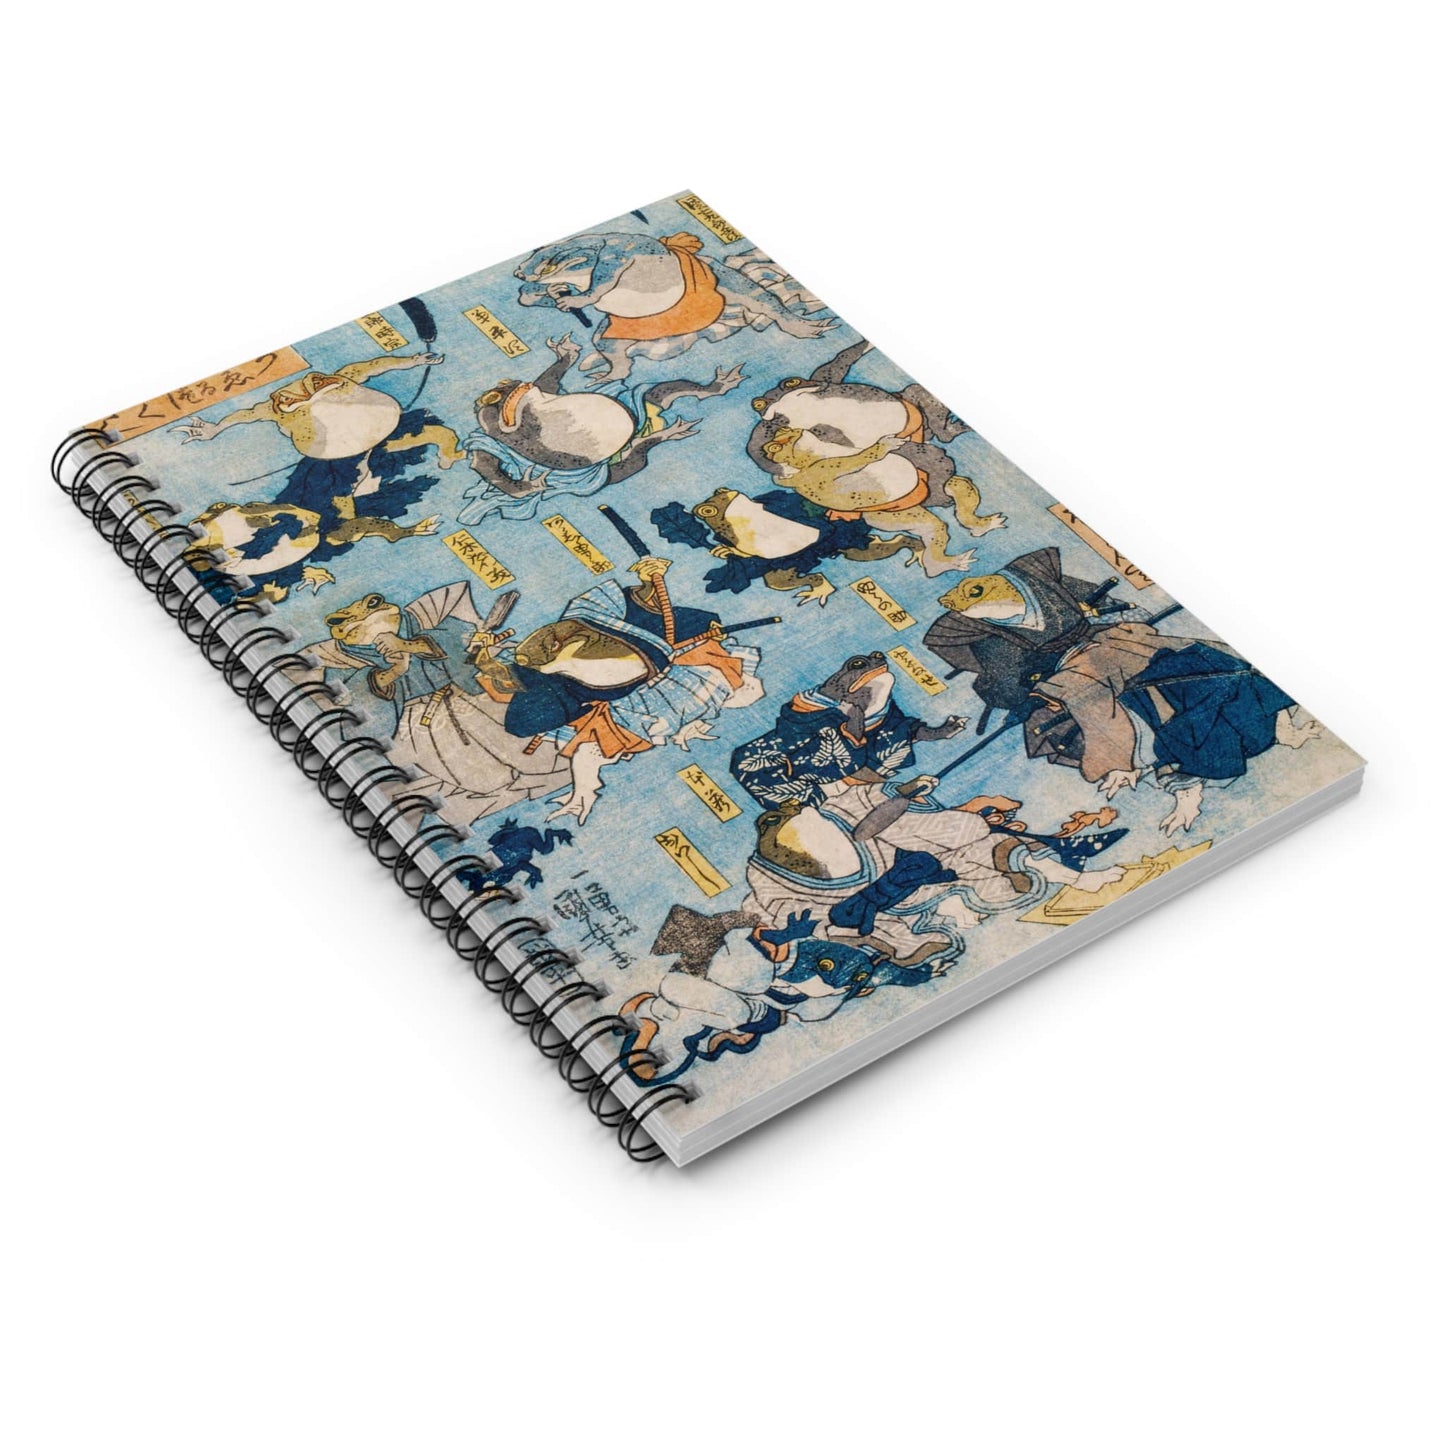 Samurai Frogs Spiral Notebook Laying Flat on White Surface